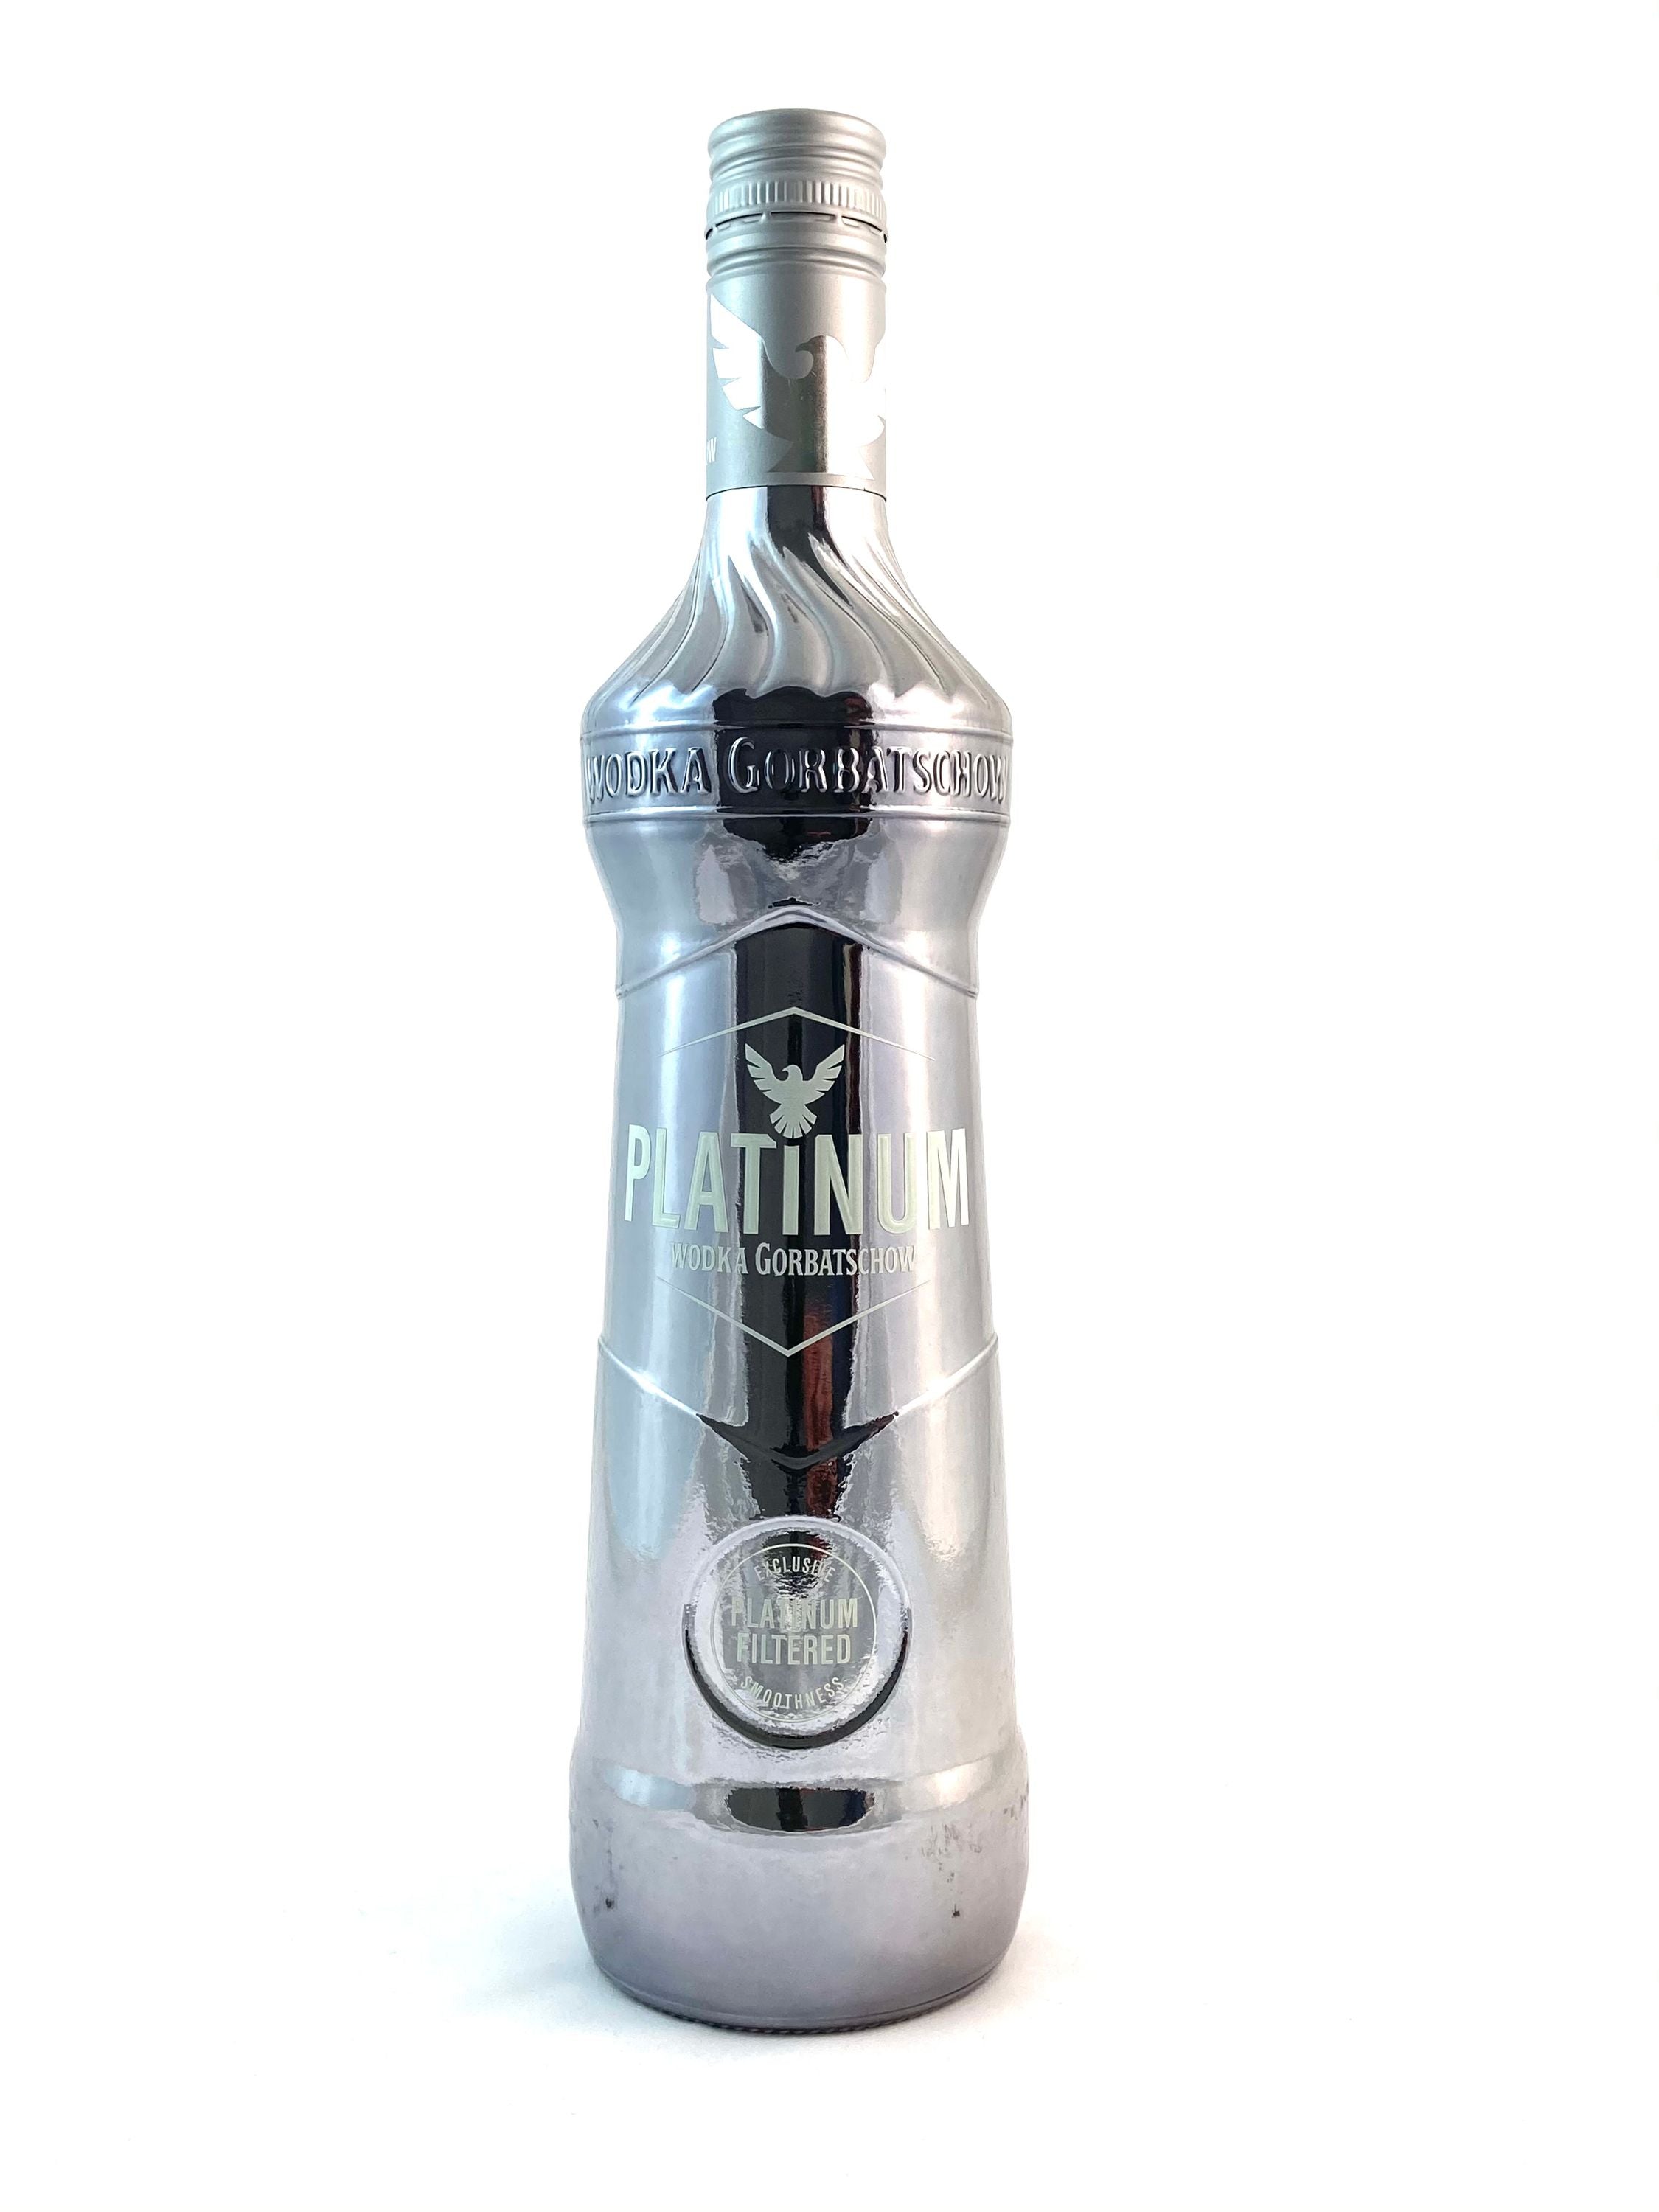 Vodka Gorbachev Platinum 0,7 litraa alk. 40 % tilavuudesta